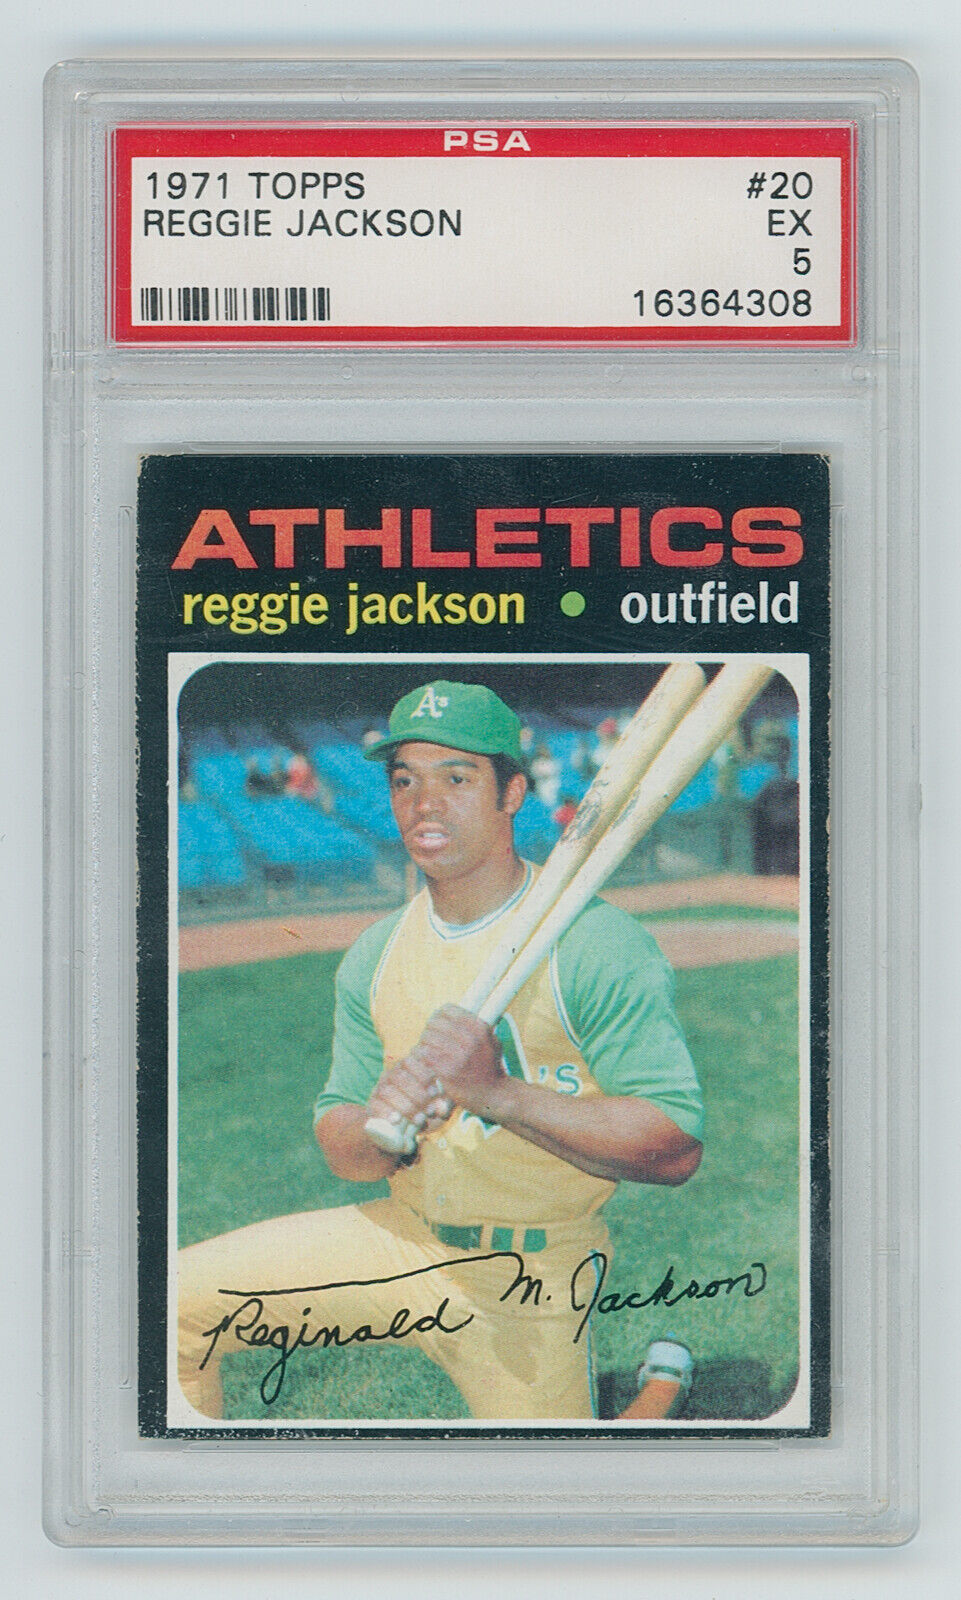 1971 Topps Reggie Jackson. New York Yankees. 